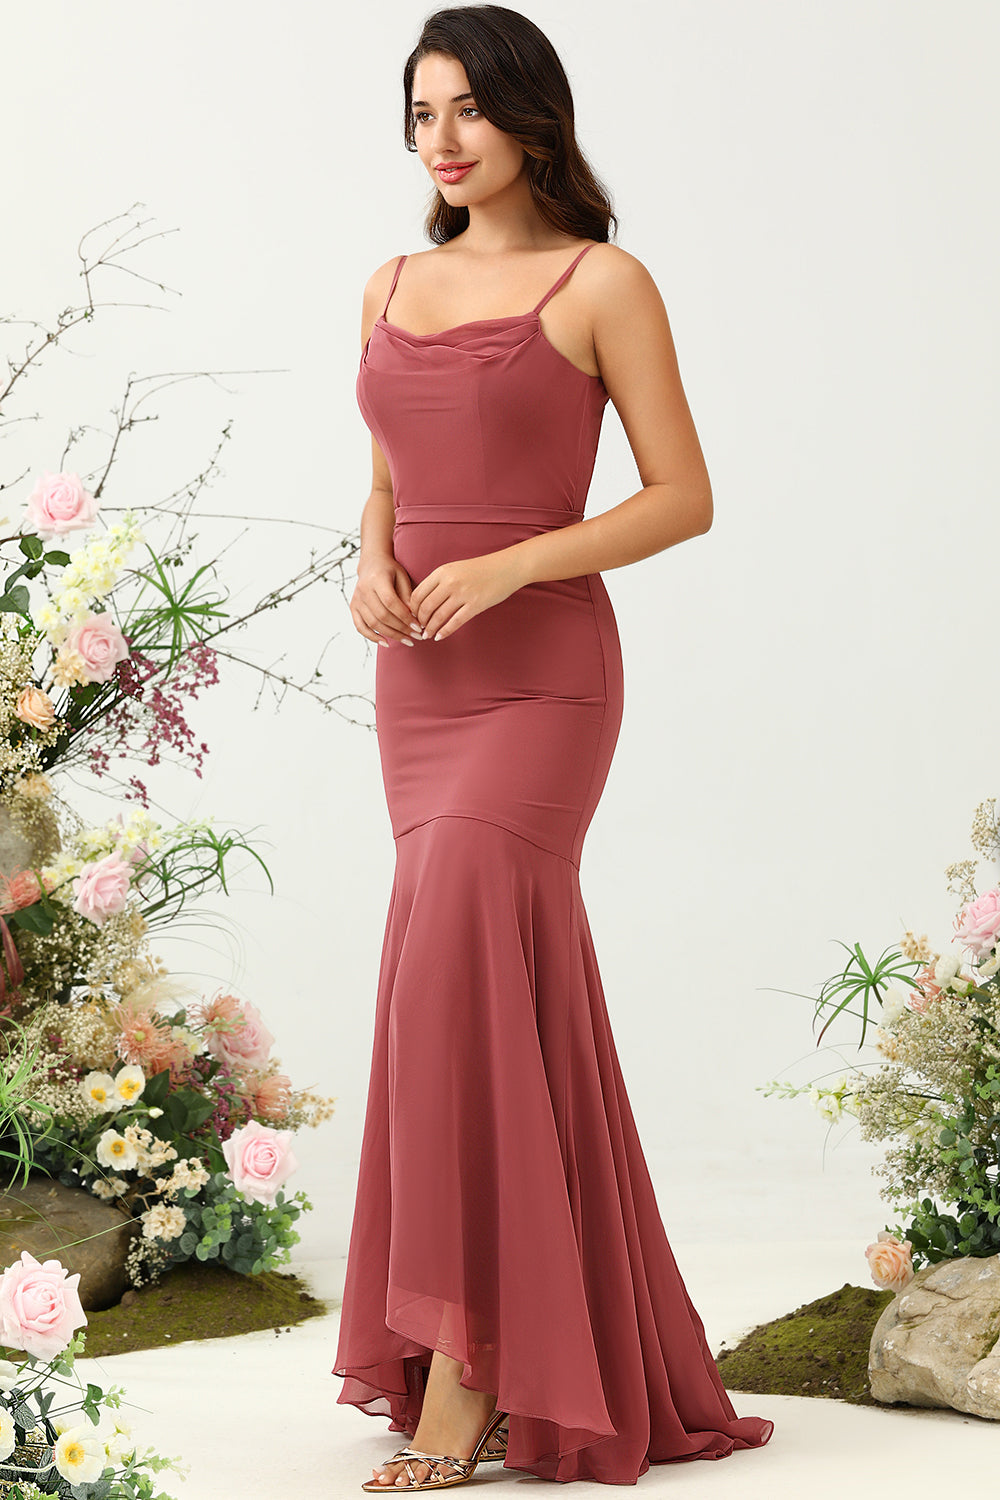 Desert Rose Mermaid Spaghetti Straps Asymmetrical Chiffon Bridesmaid Dress